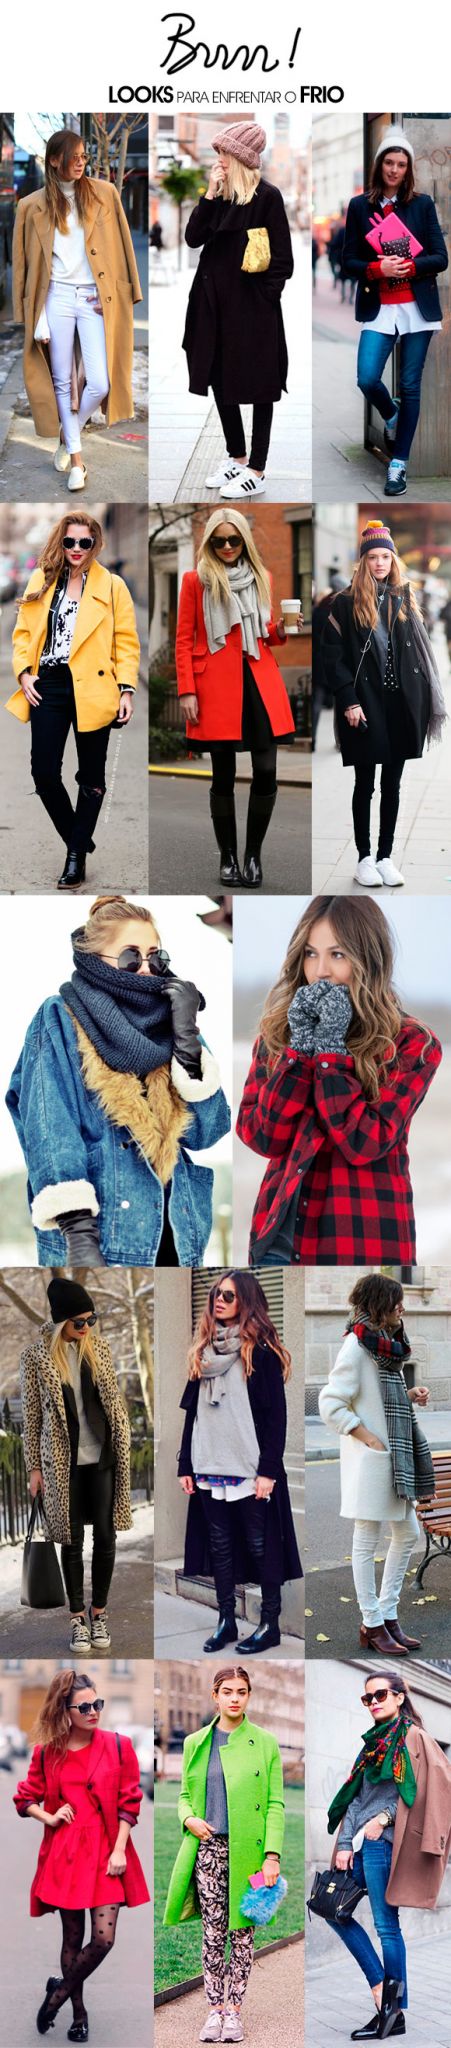 Achados da Bia | Moda | Look Frio | Inverno NY